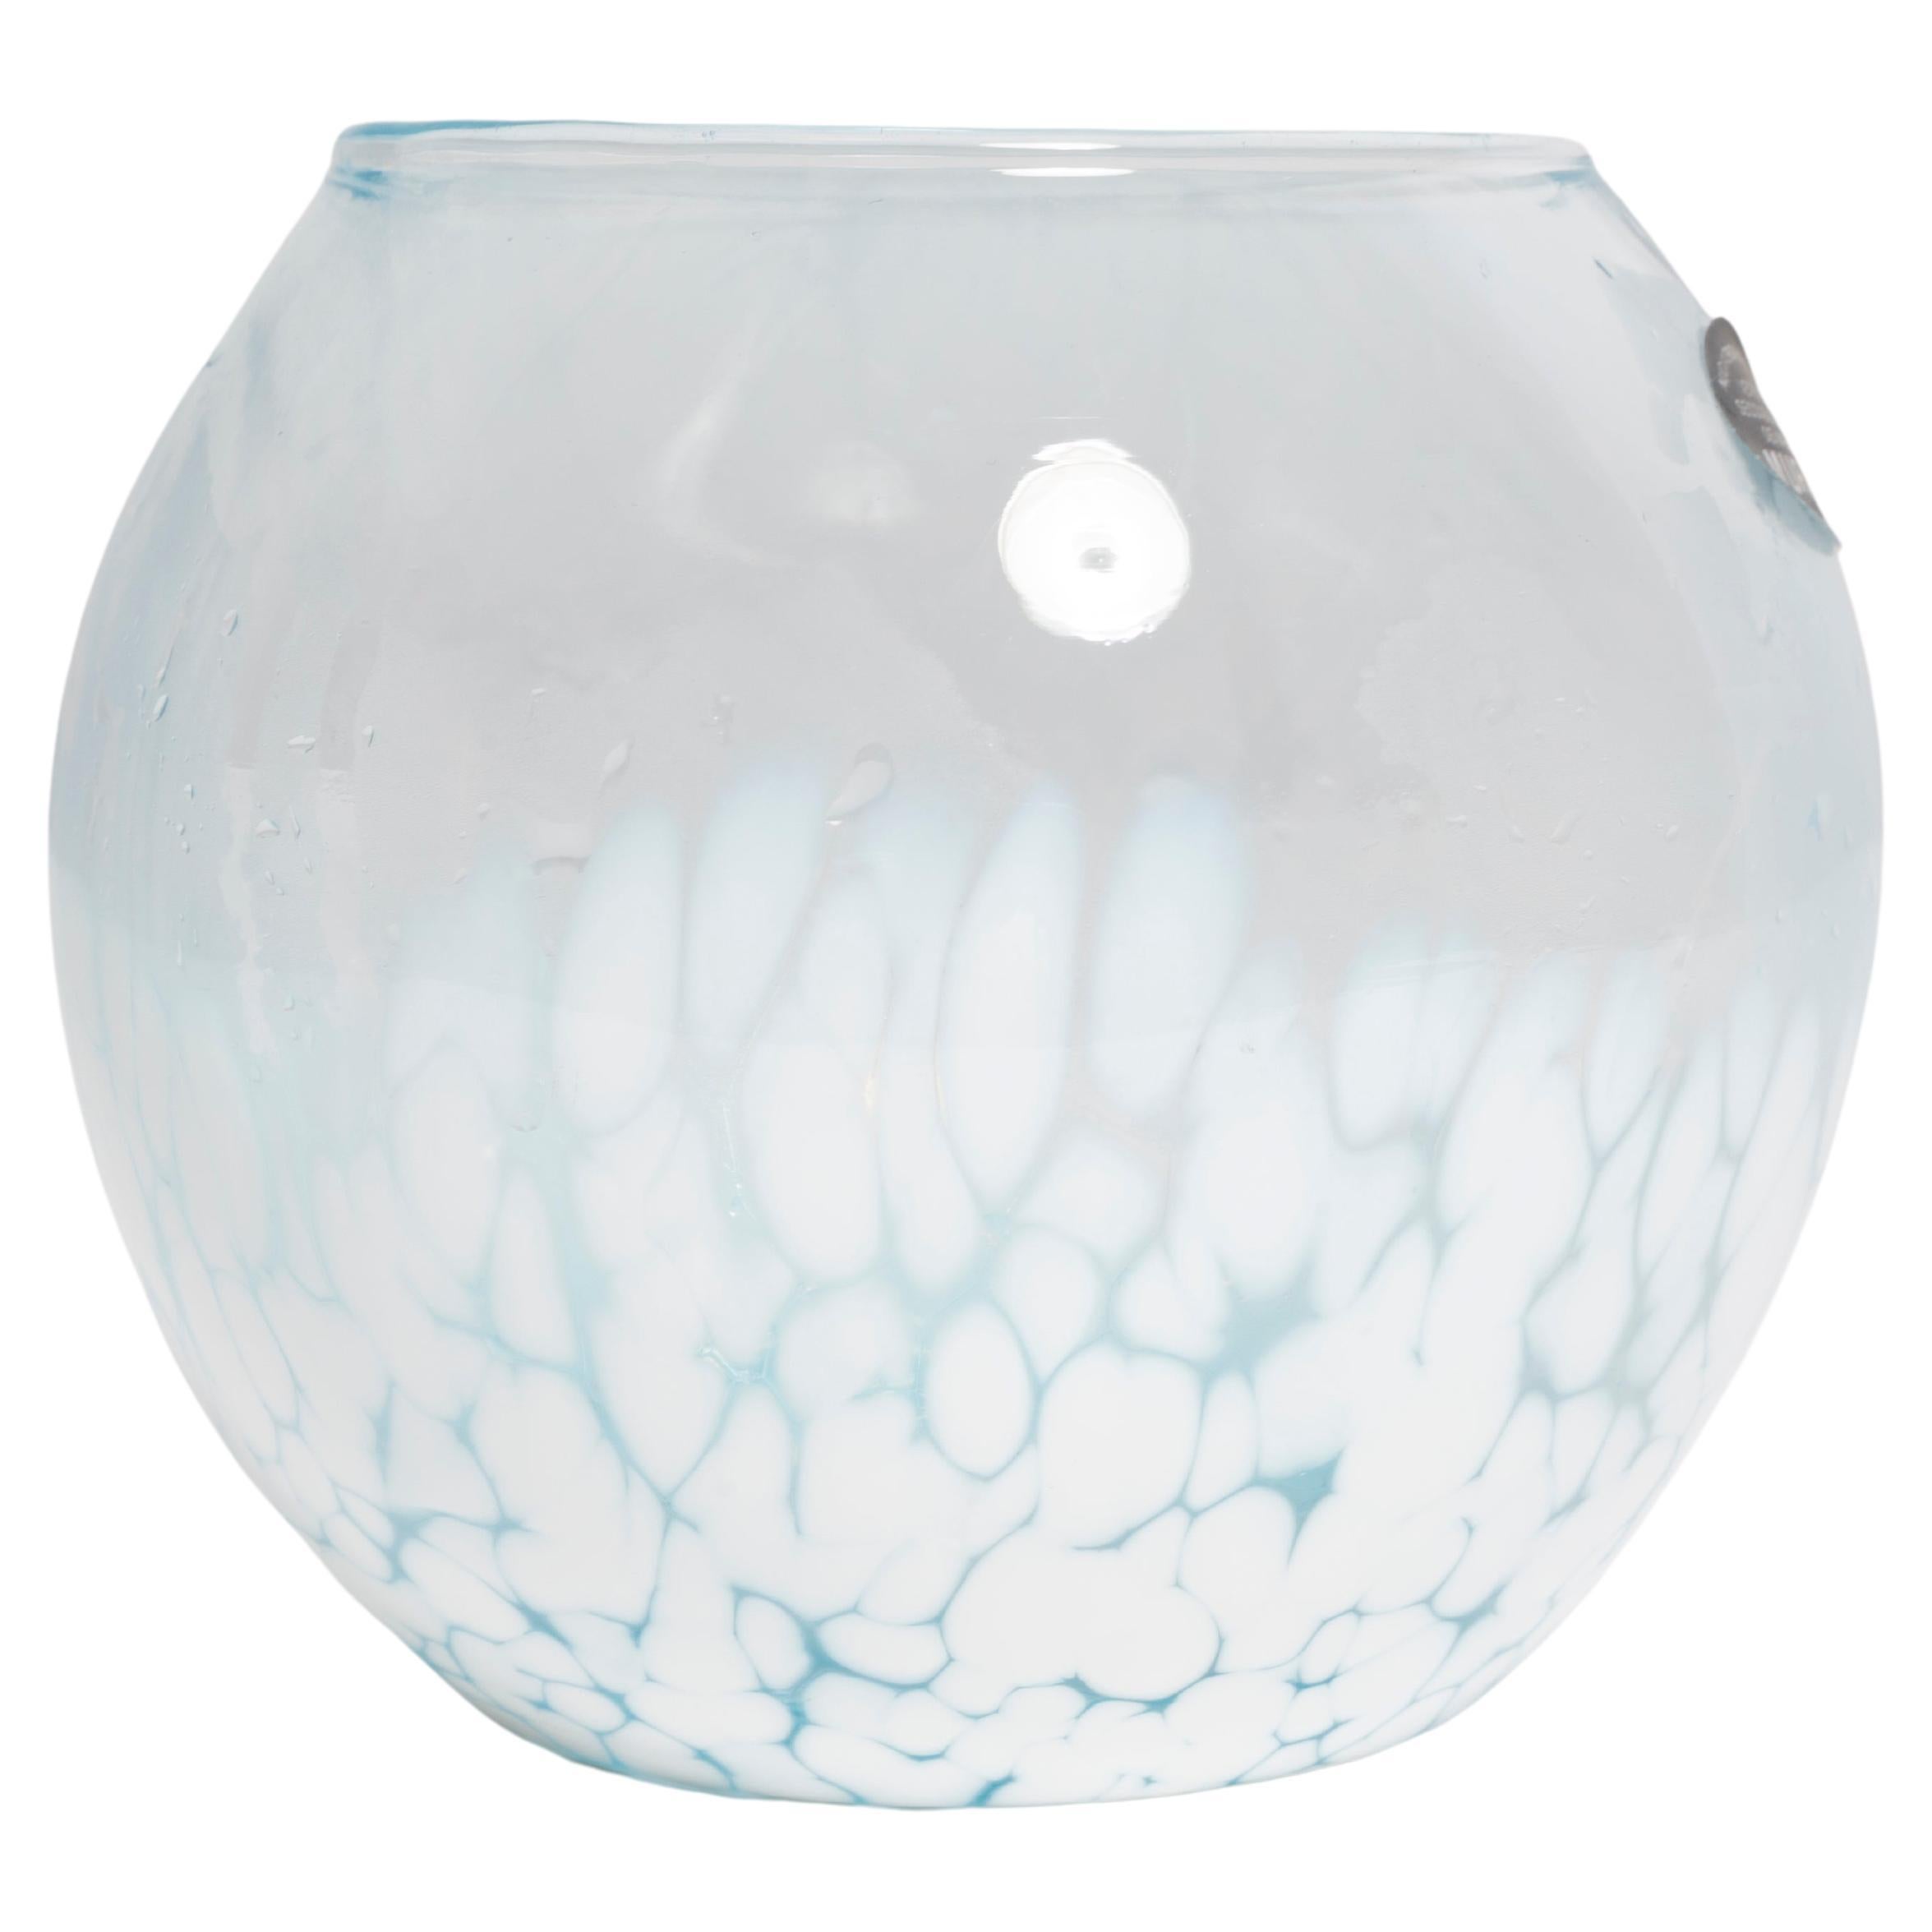 Vintage White and Blue Decorative Murano Glass Mini Vase, Italy, 1960s